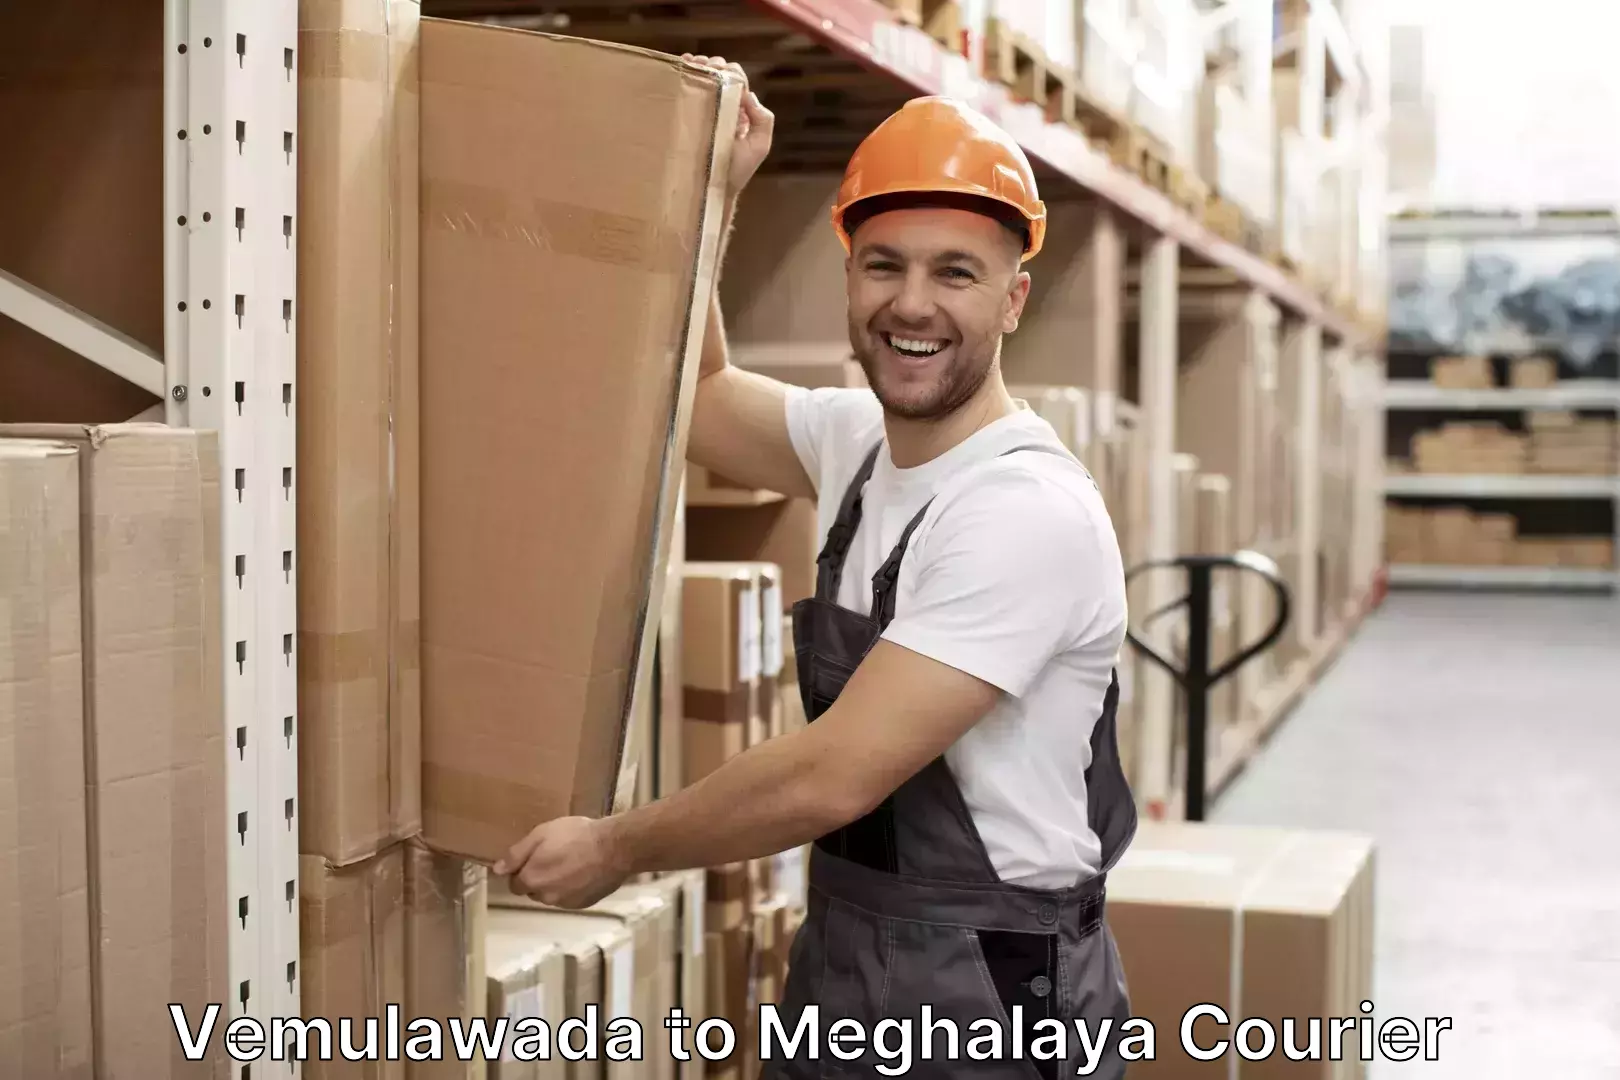 Luggage delivery app Vemulawada to Meghalaya